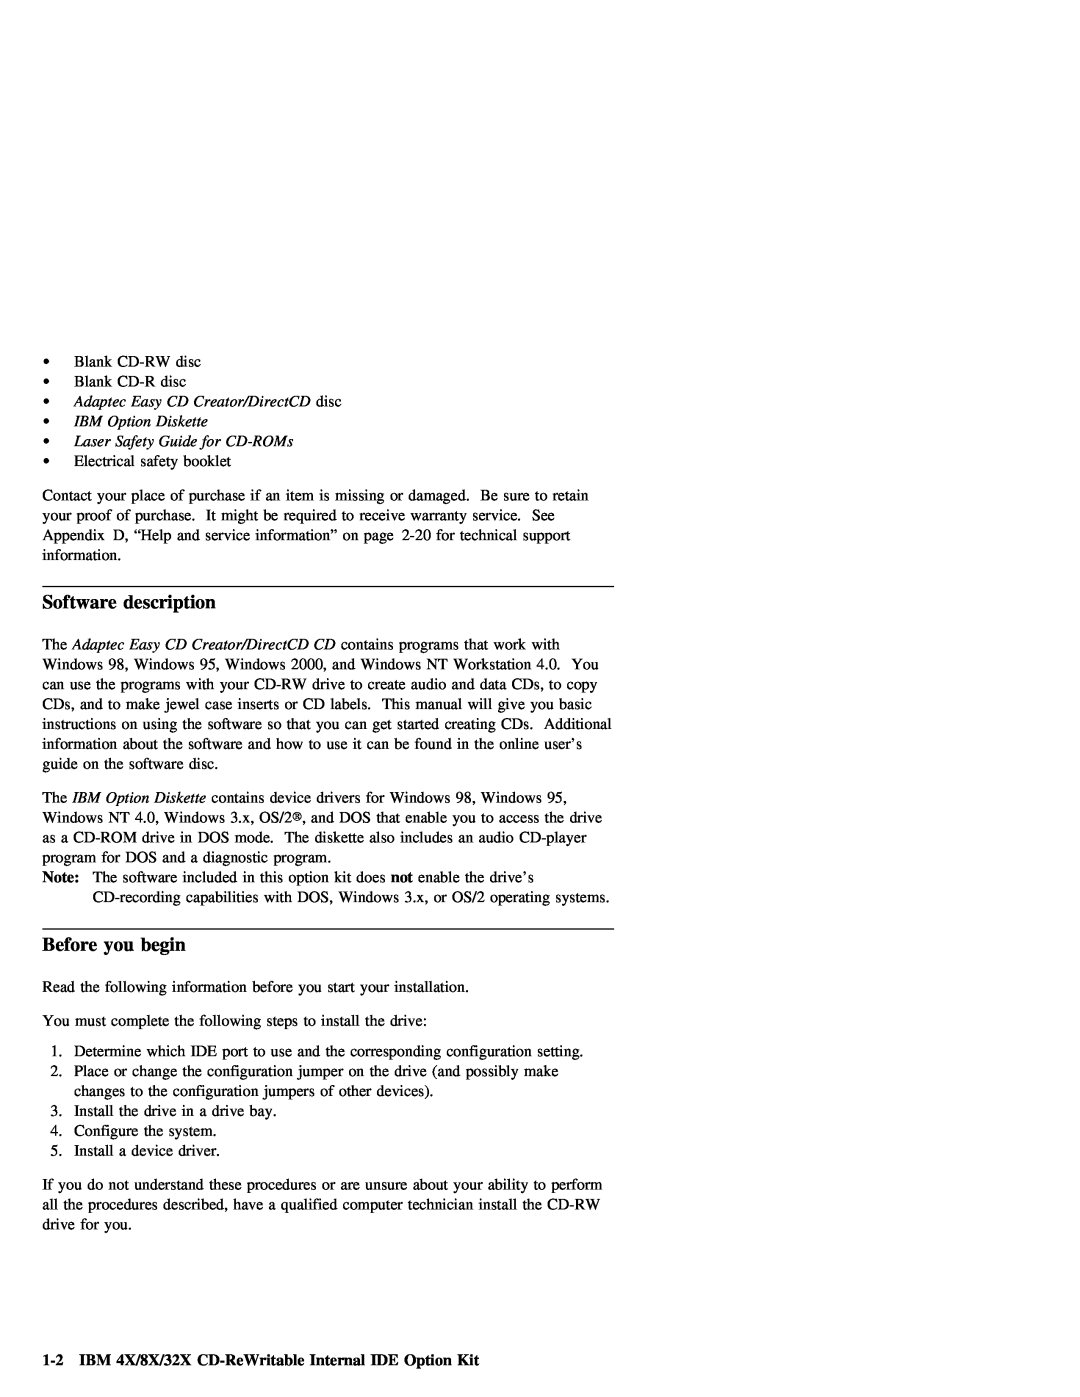 IBM 09N4076 manual Software description, Before you begin, IBM 4X/8X/32X CD-ReWritable Internal IDE Option Kit 